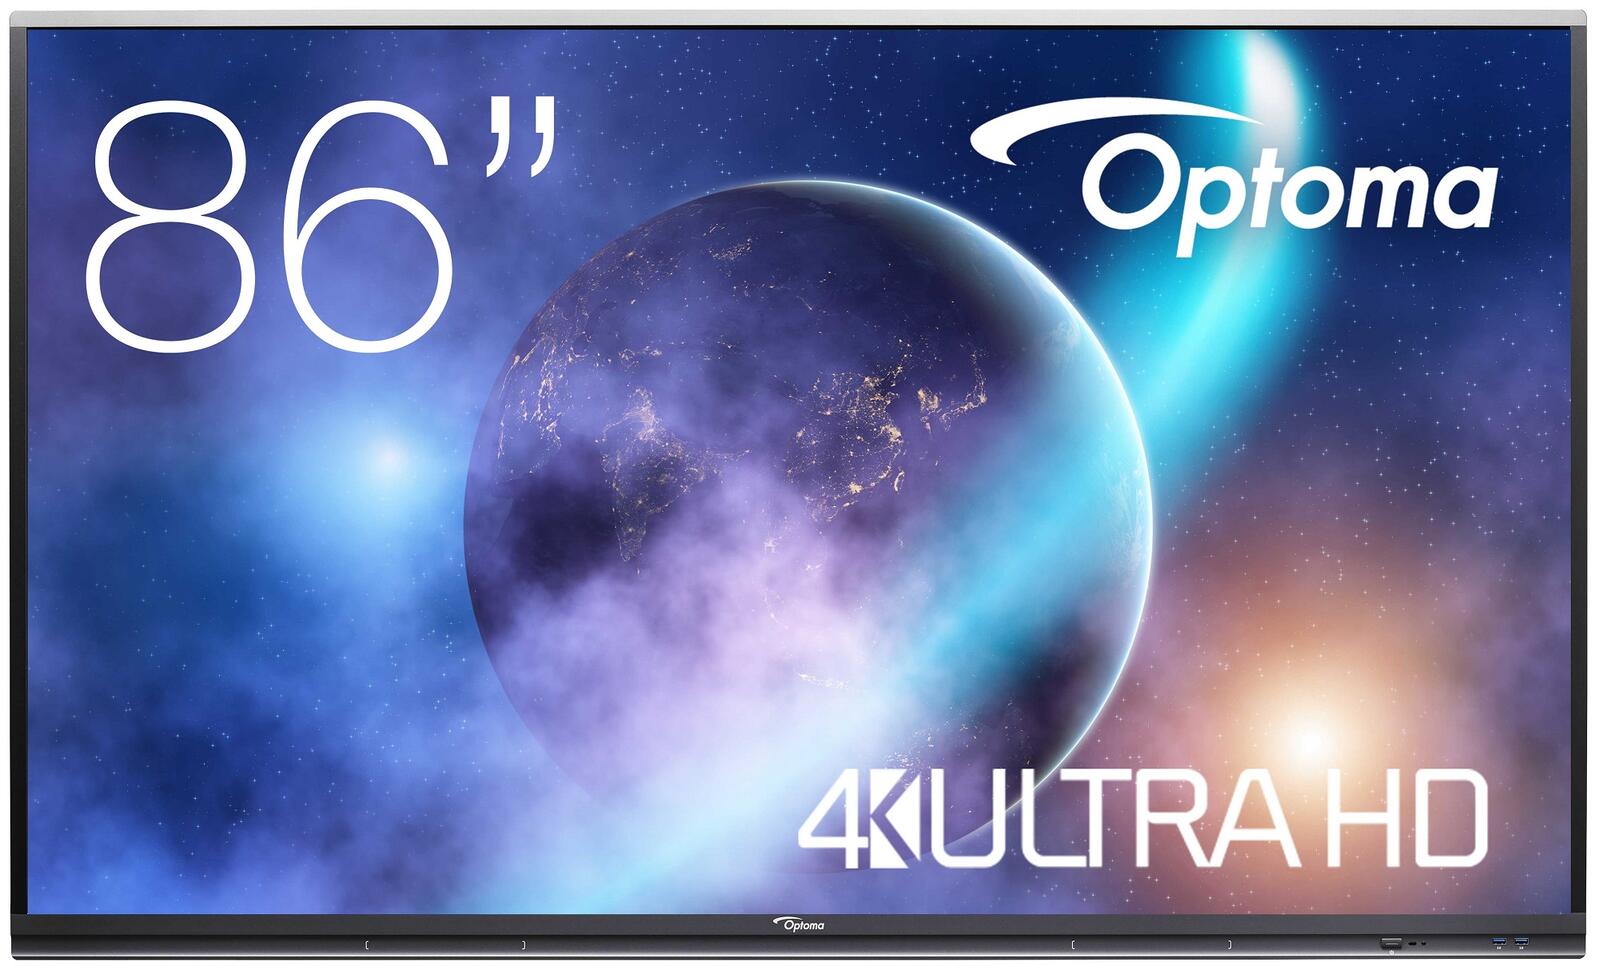 Optoma 5862RK Digital Signage Touch Display 218 cm 86 Zoll (4K UHD, 400 cd/m, HDMI, VGA, USB, USB-C, LAN, Android 9) publiskie, komerciālie info ekrāni